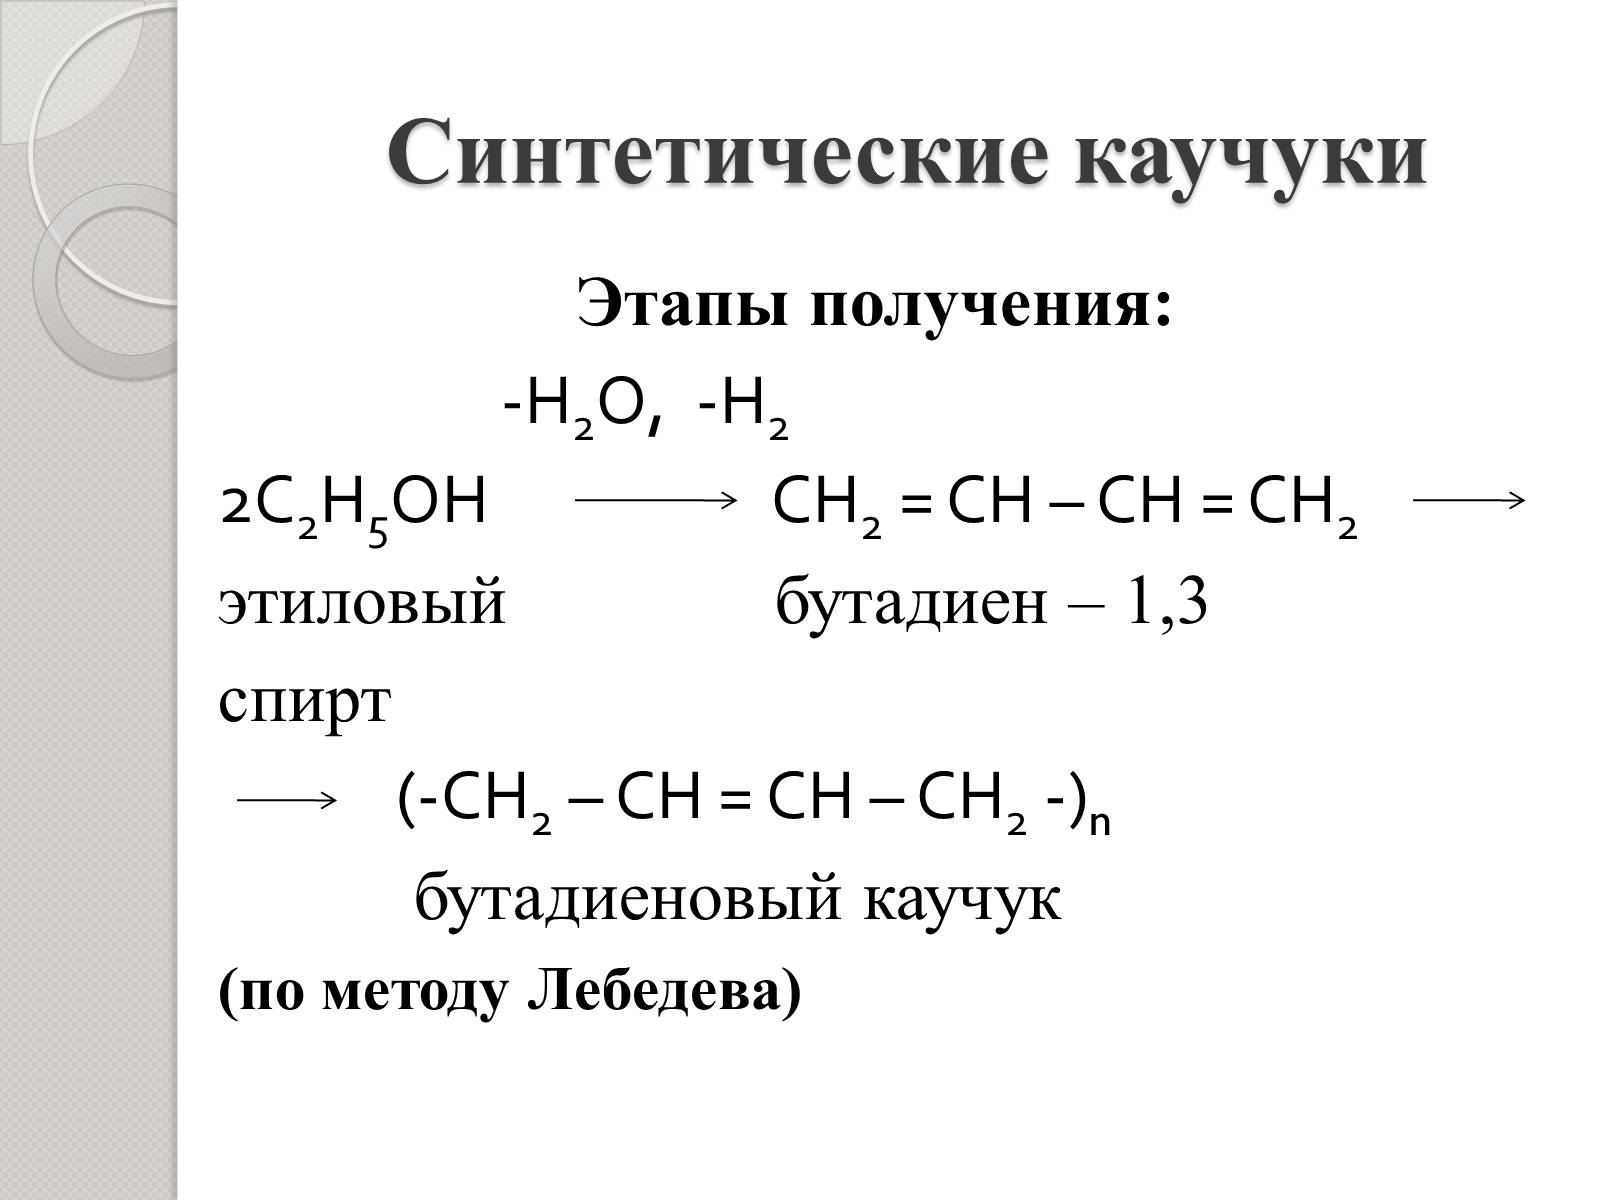 Бутадиен 1 3 метан. Синтетический каучук бутадиеновый формула. Формула Лебедева синтетический каучук. Формула получения синтетического каучука. Реакция получения синтетического каучука.